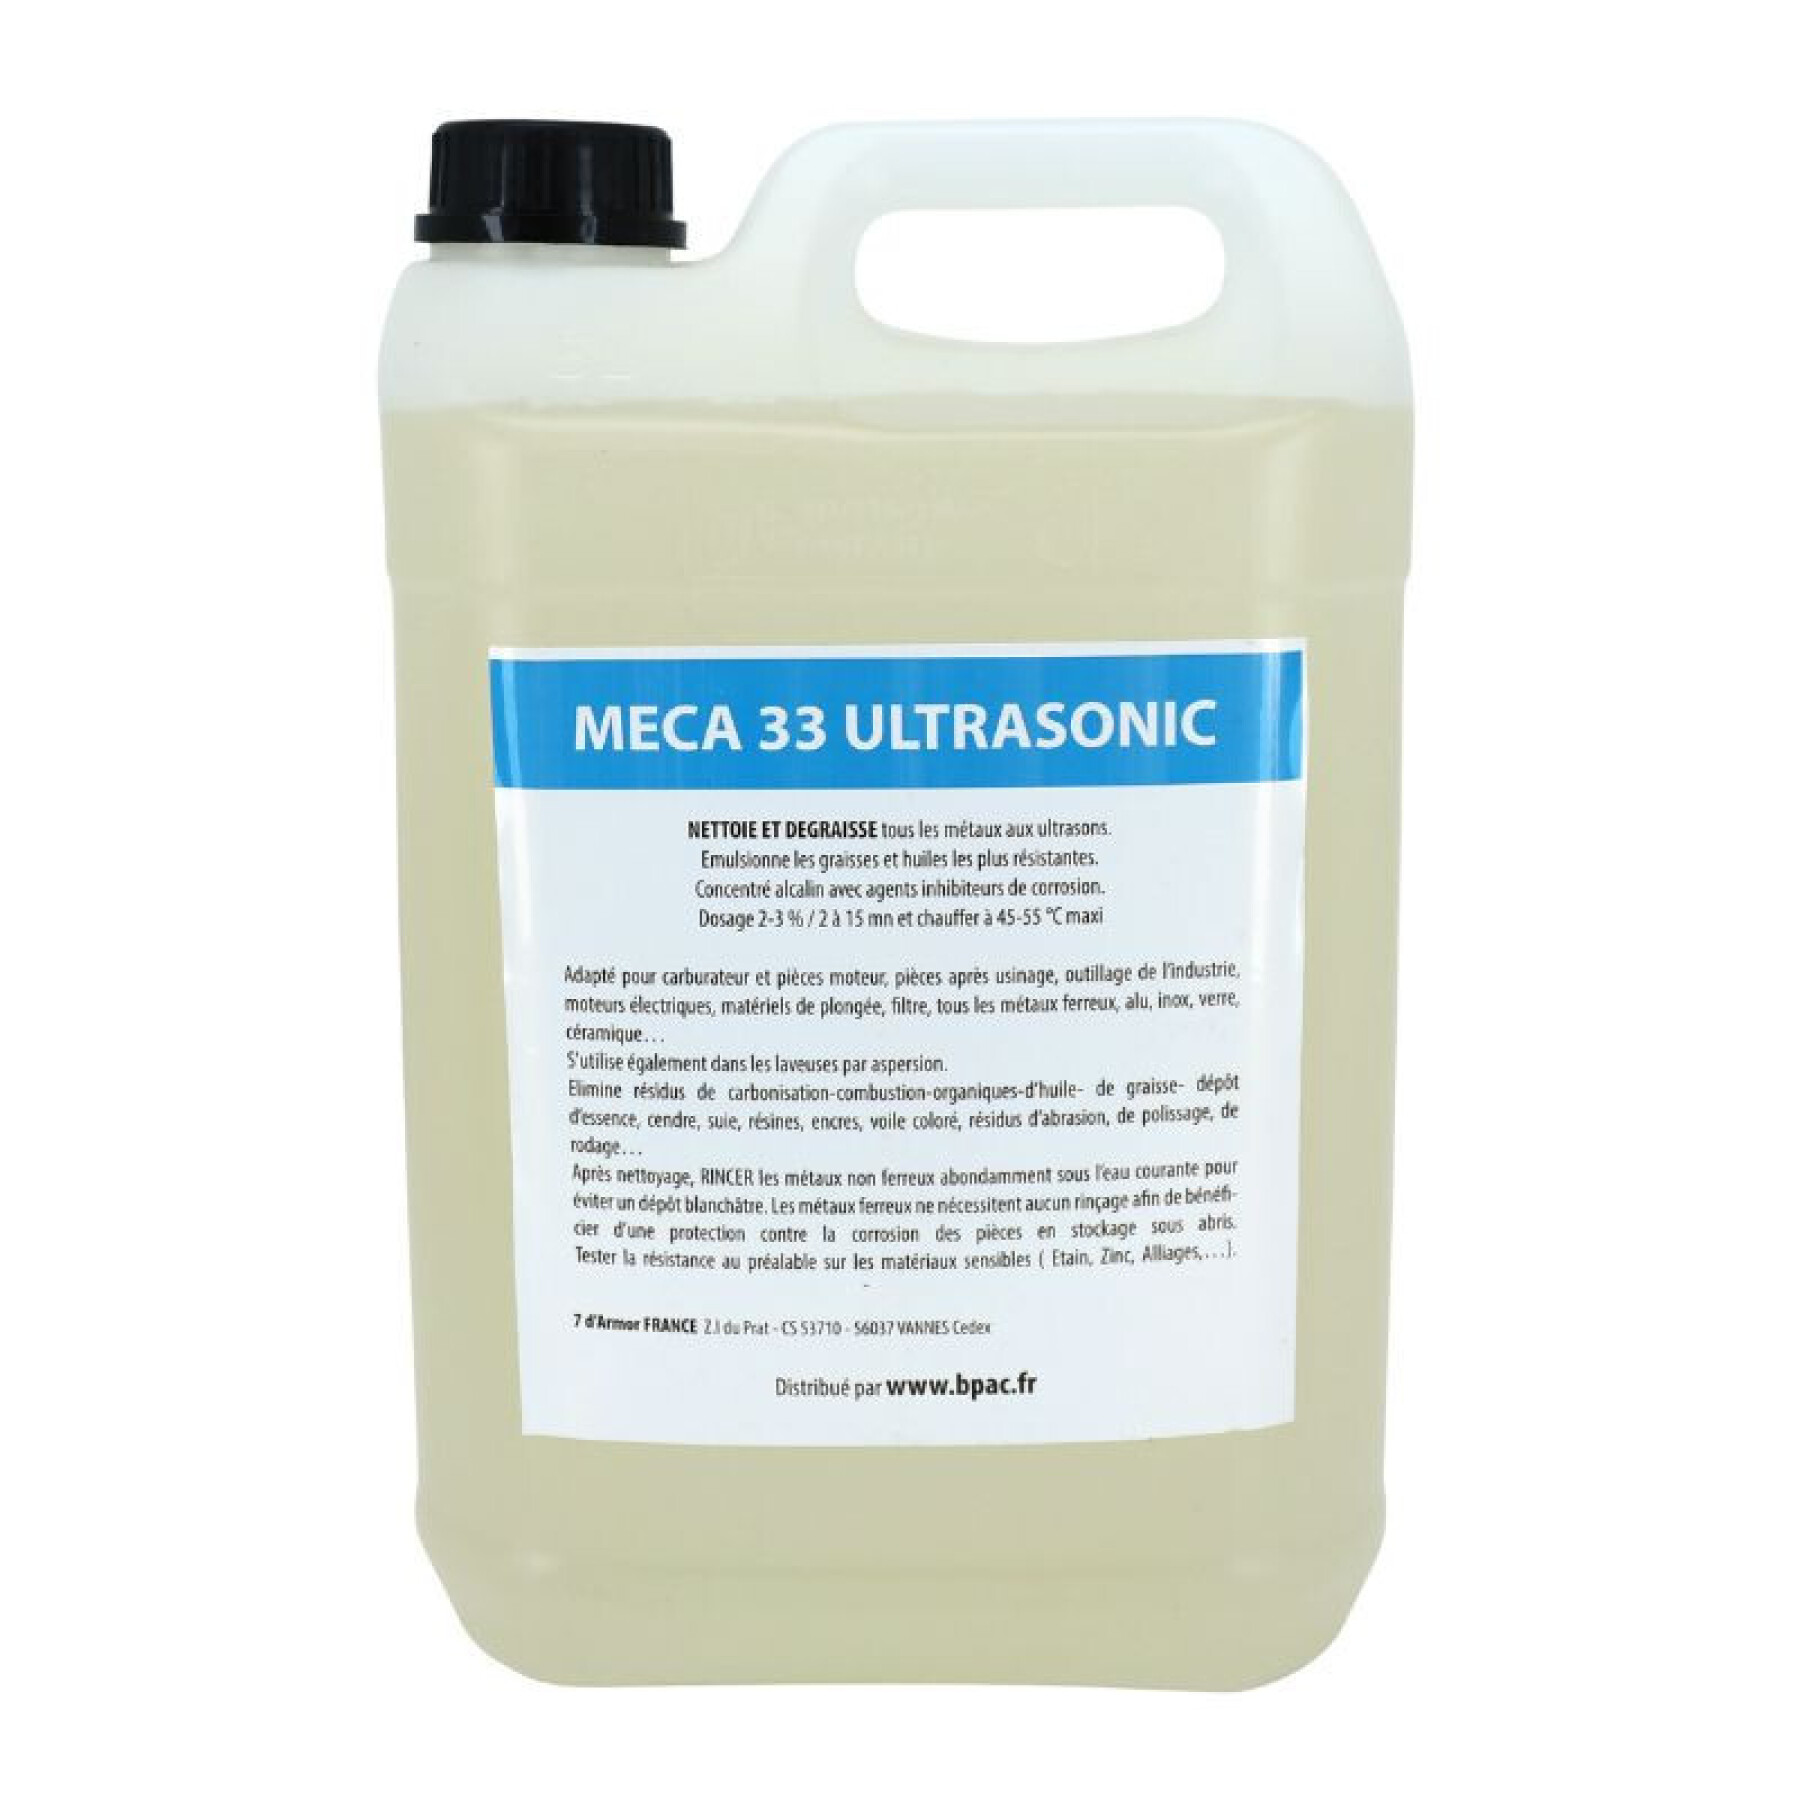 Detergent professional ultrasonic tank cleaner P2R Meca 33